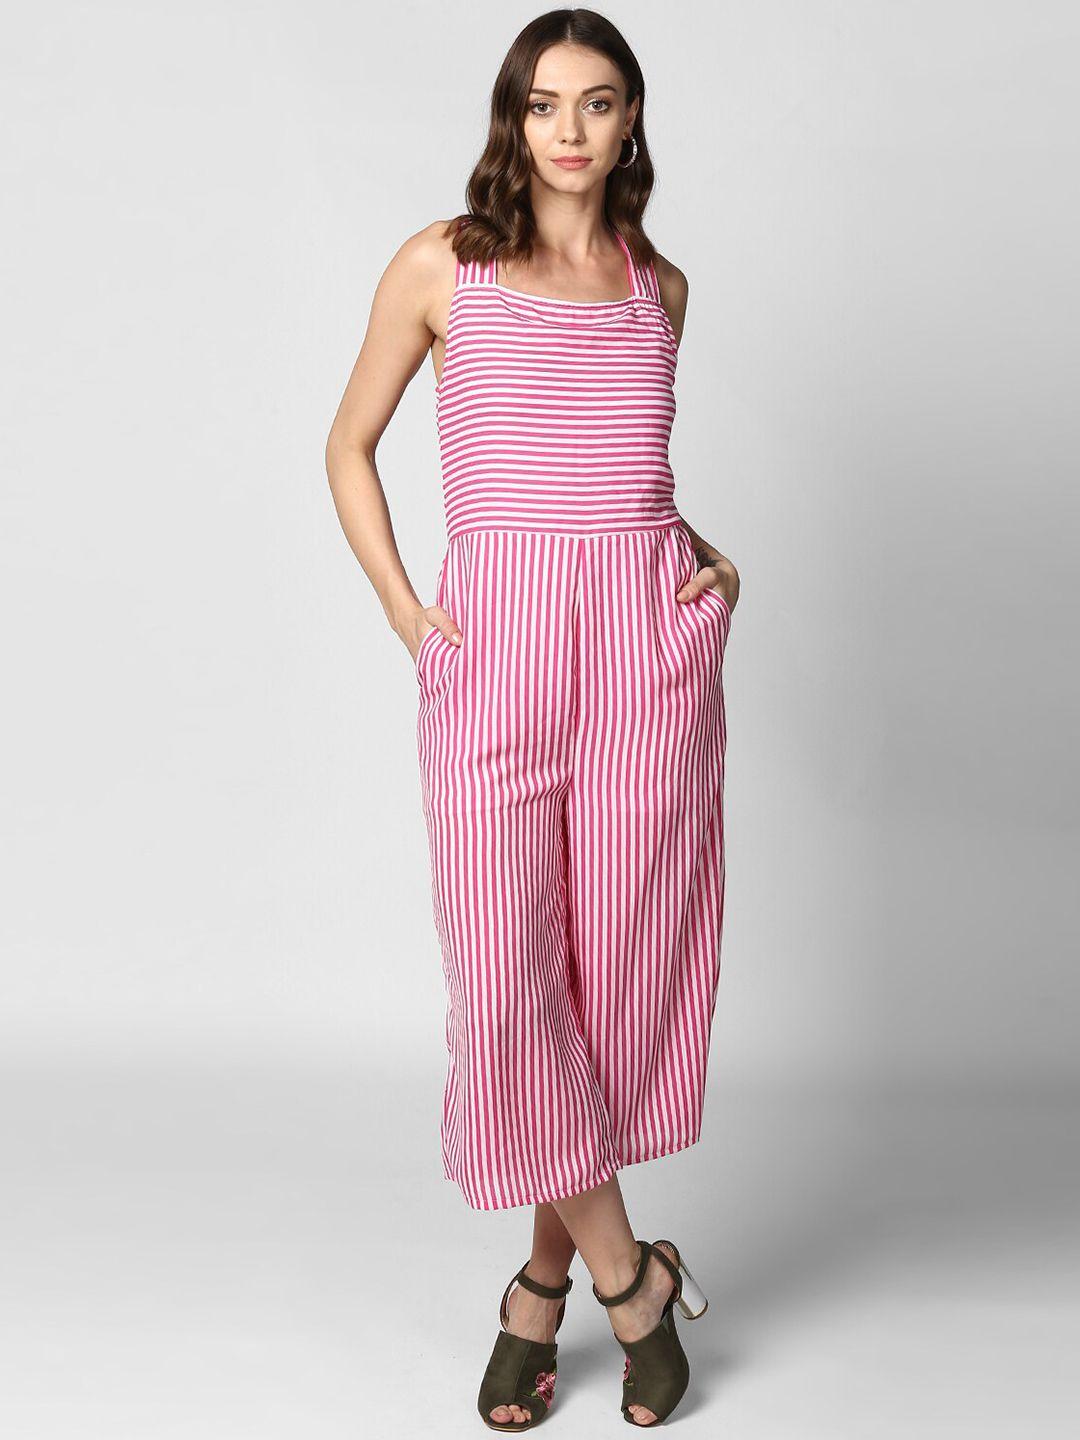 stylestone pink & white striped basic jumpsuit